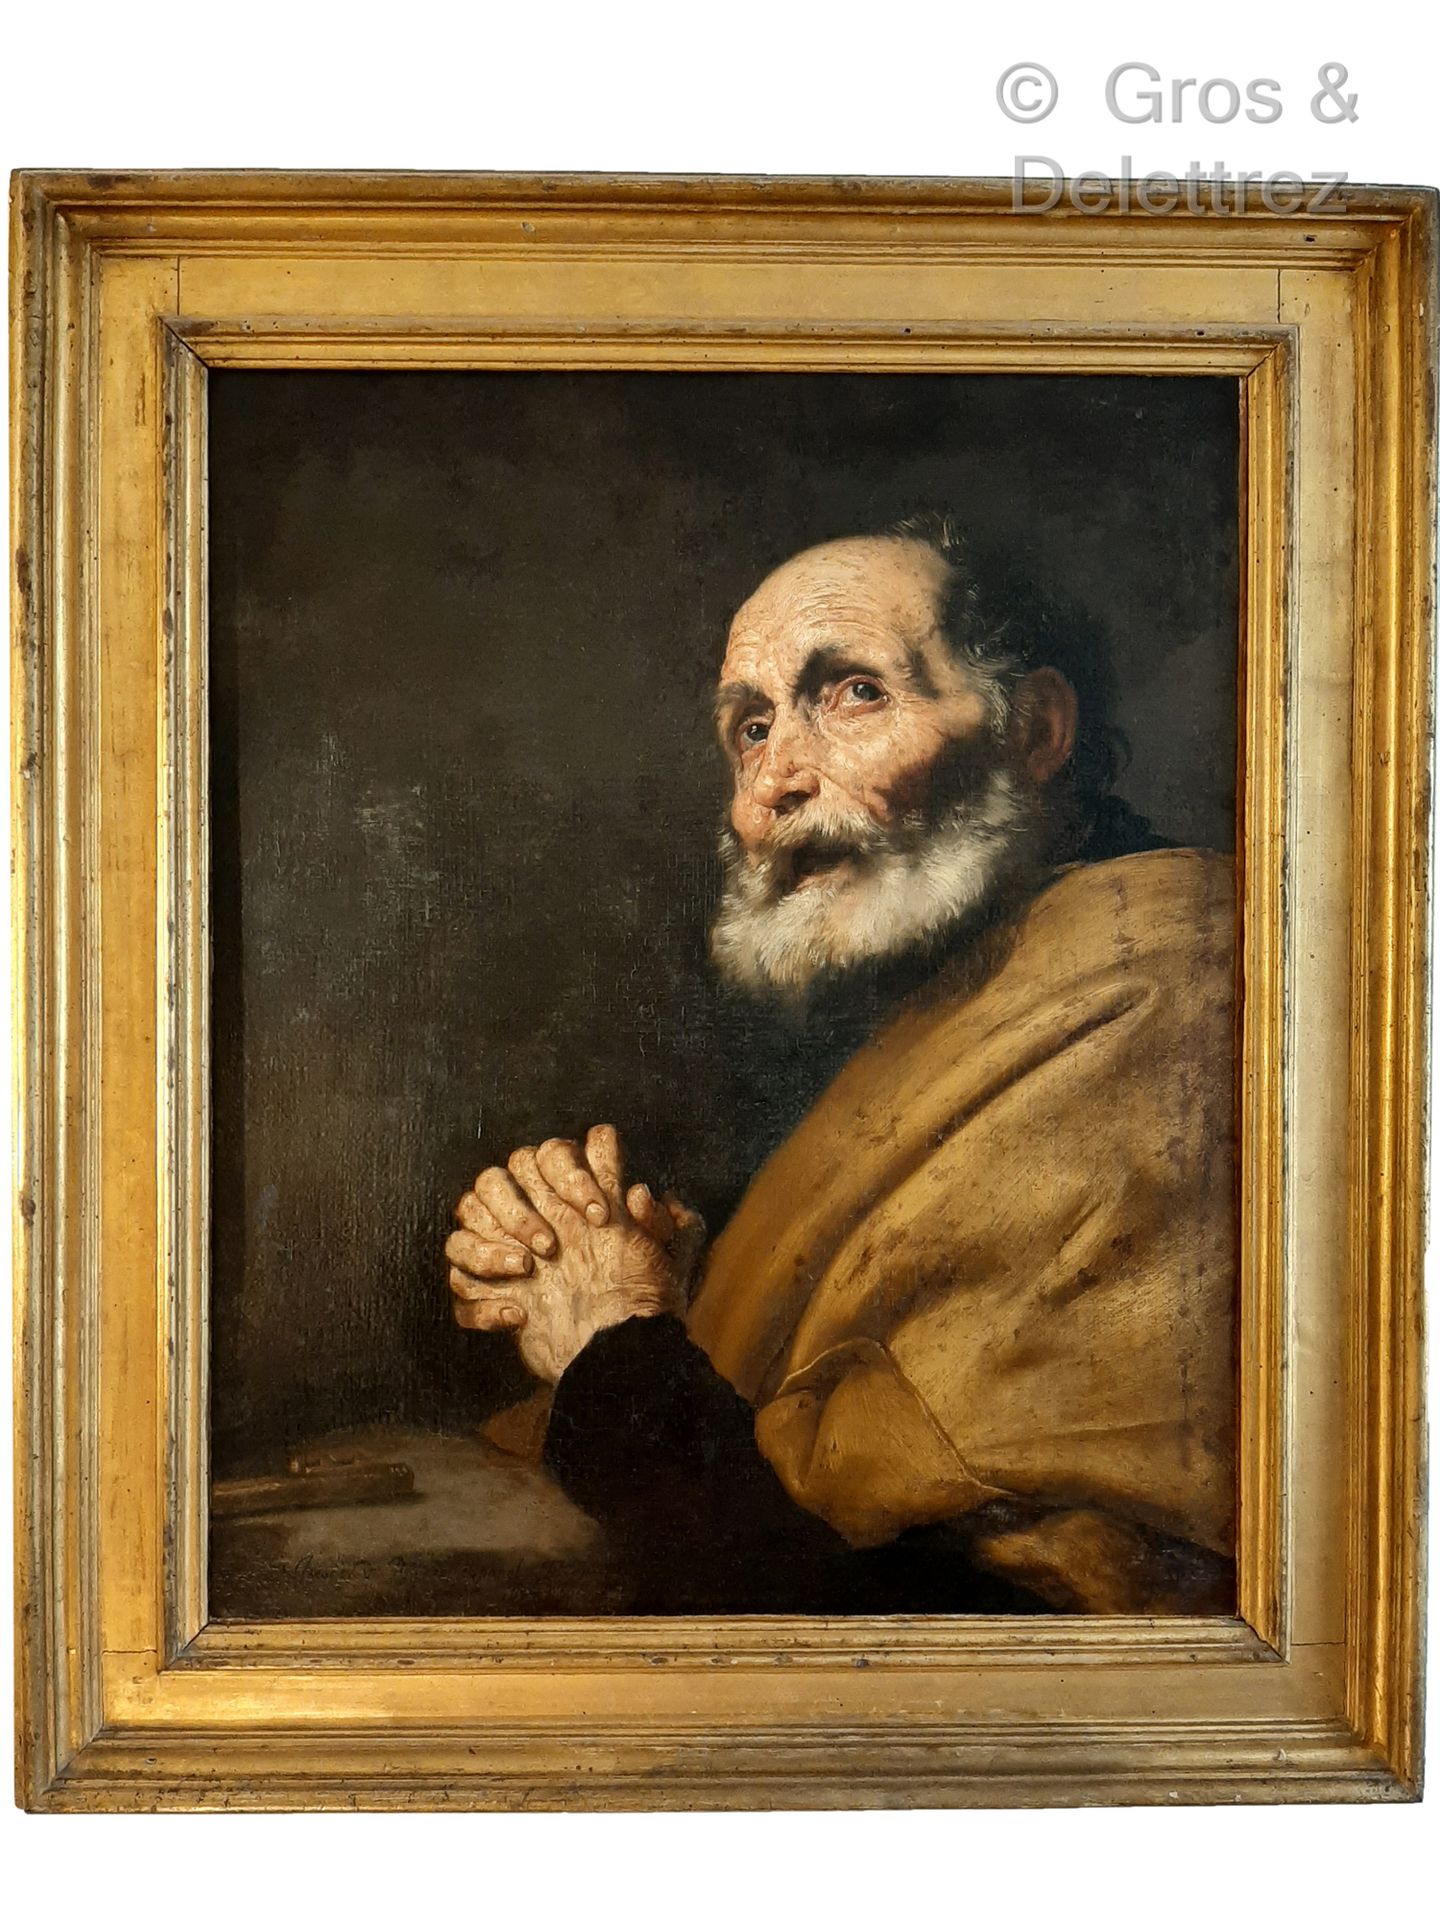 Null Jusepe de RIBERA (Jativa 1588 - Neapel 1656)

Der reuige Heilige Petrus

Le&hellip;